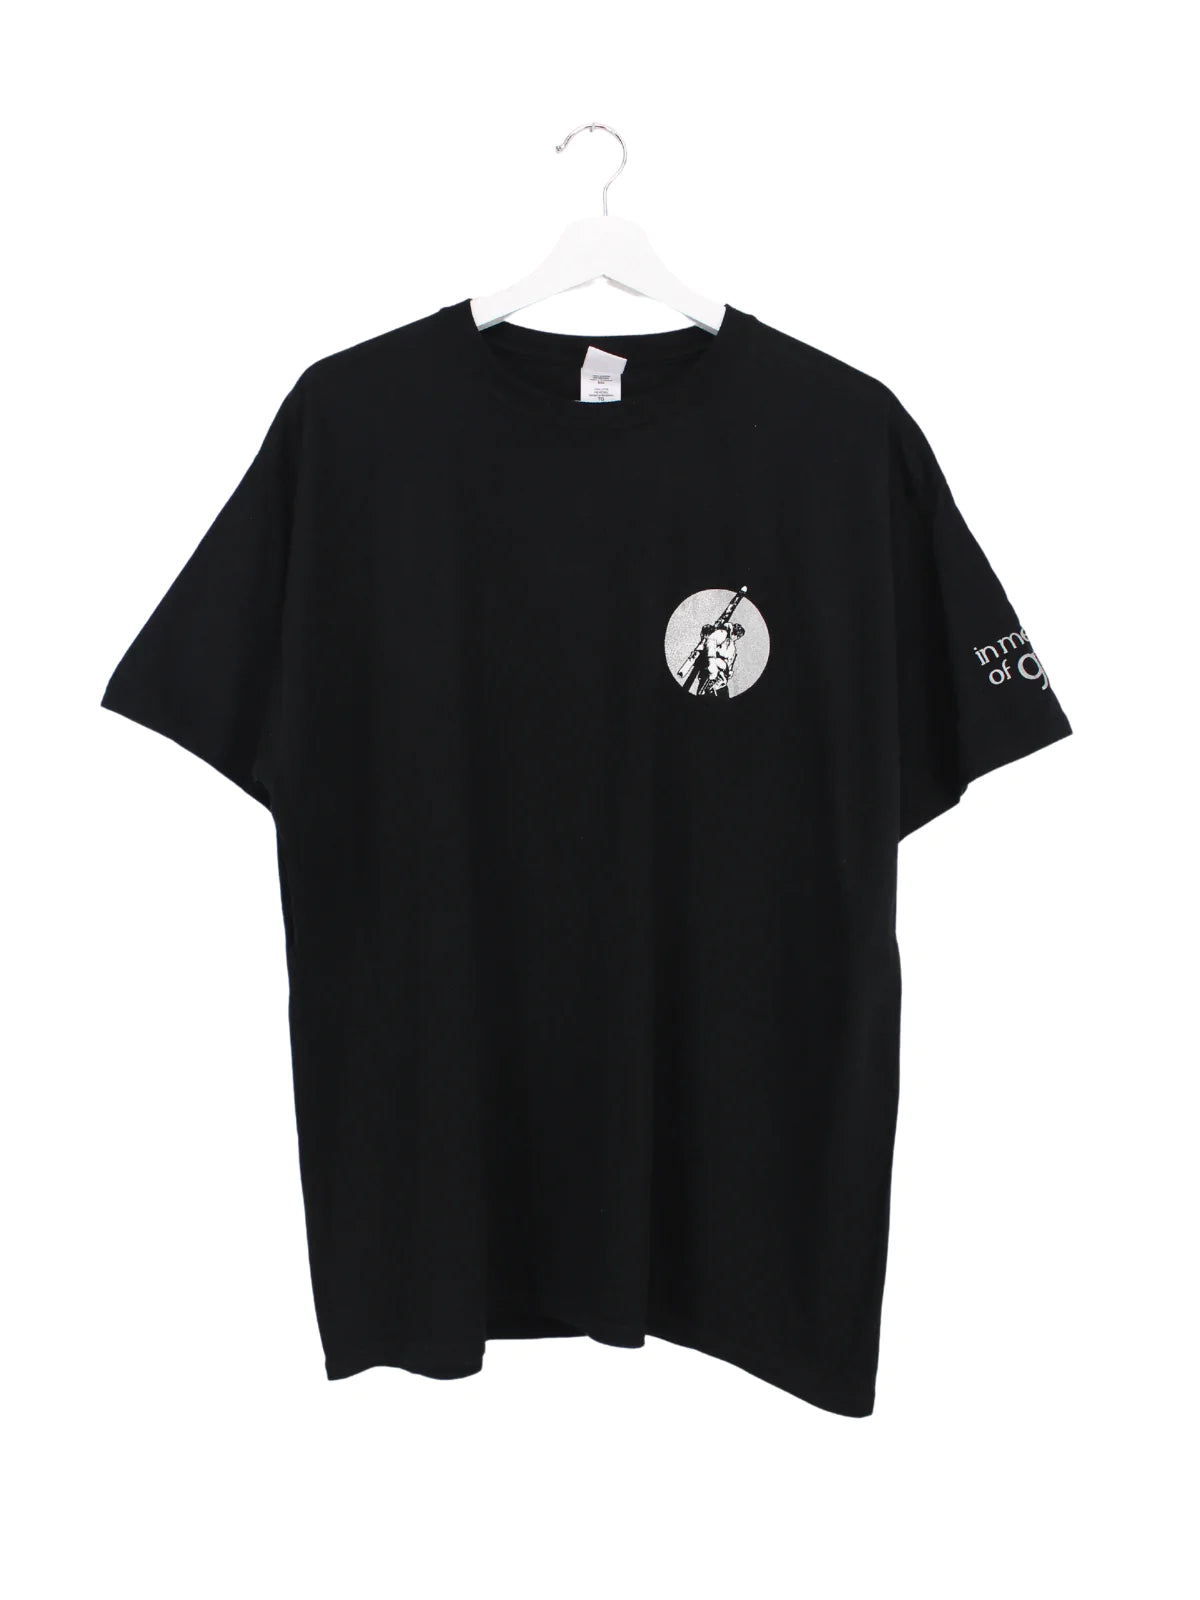 Print T-Shirt Schwarz XL